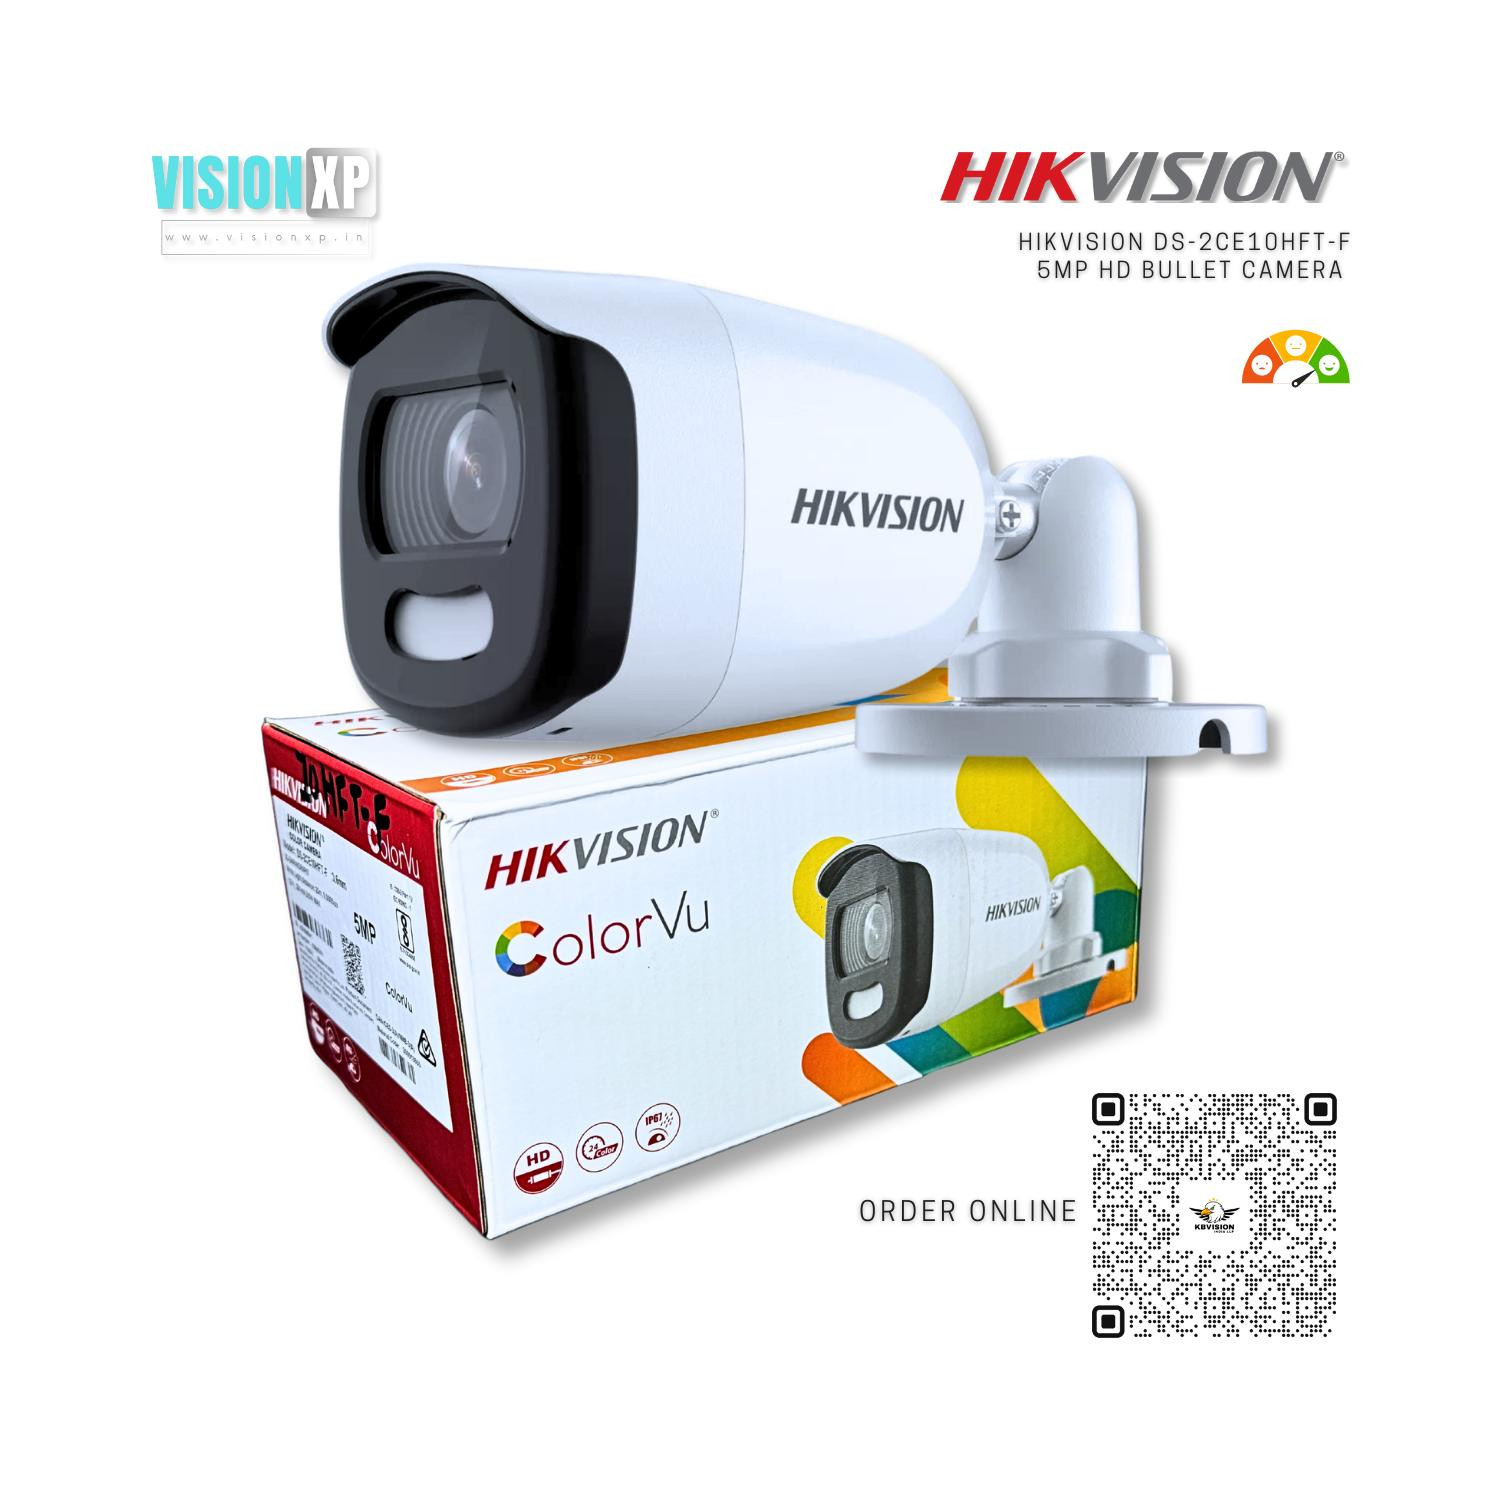 Hikvision DS-2CE10HFT-F 5MP HD Bullet Camera